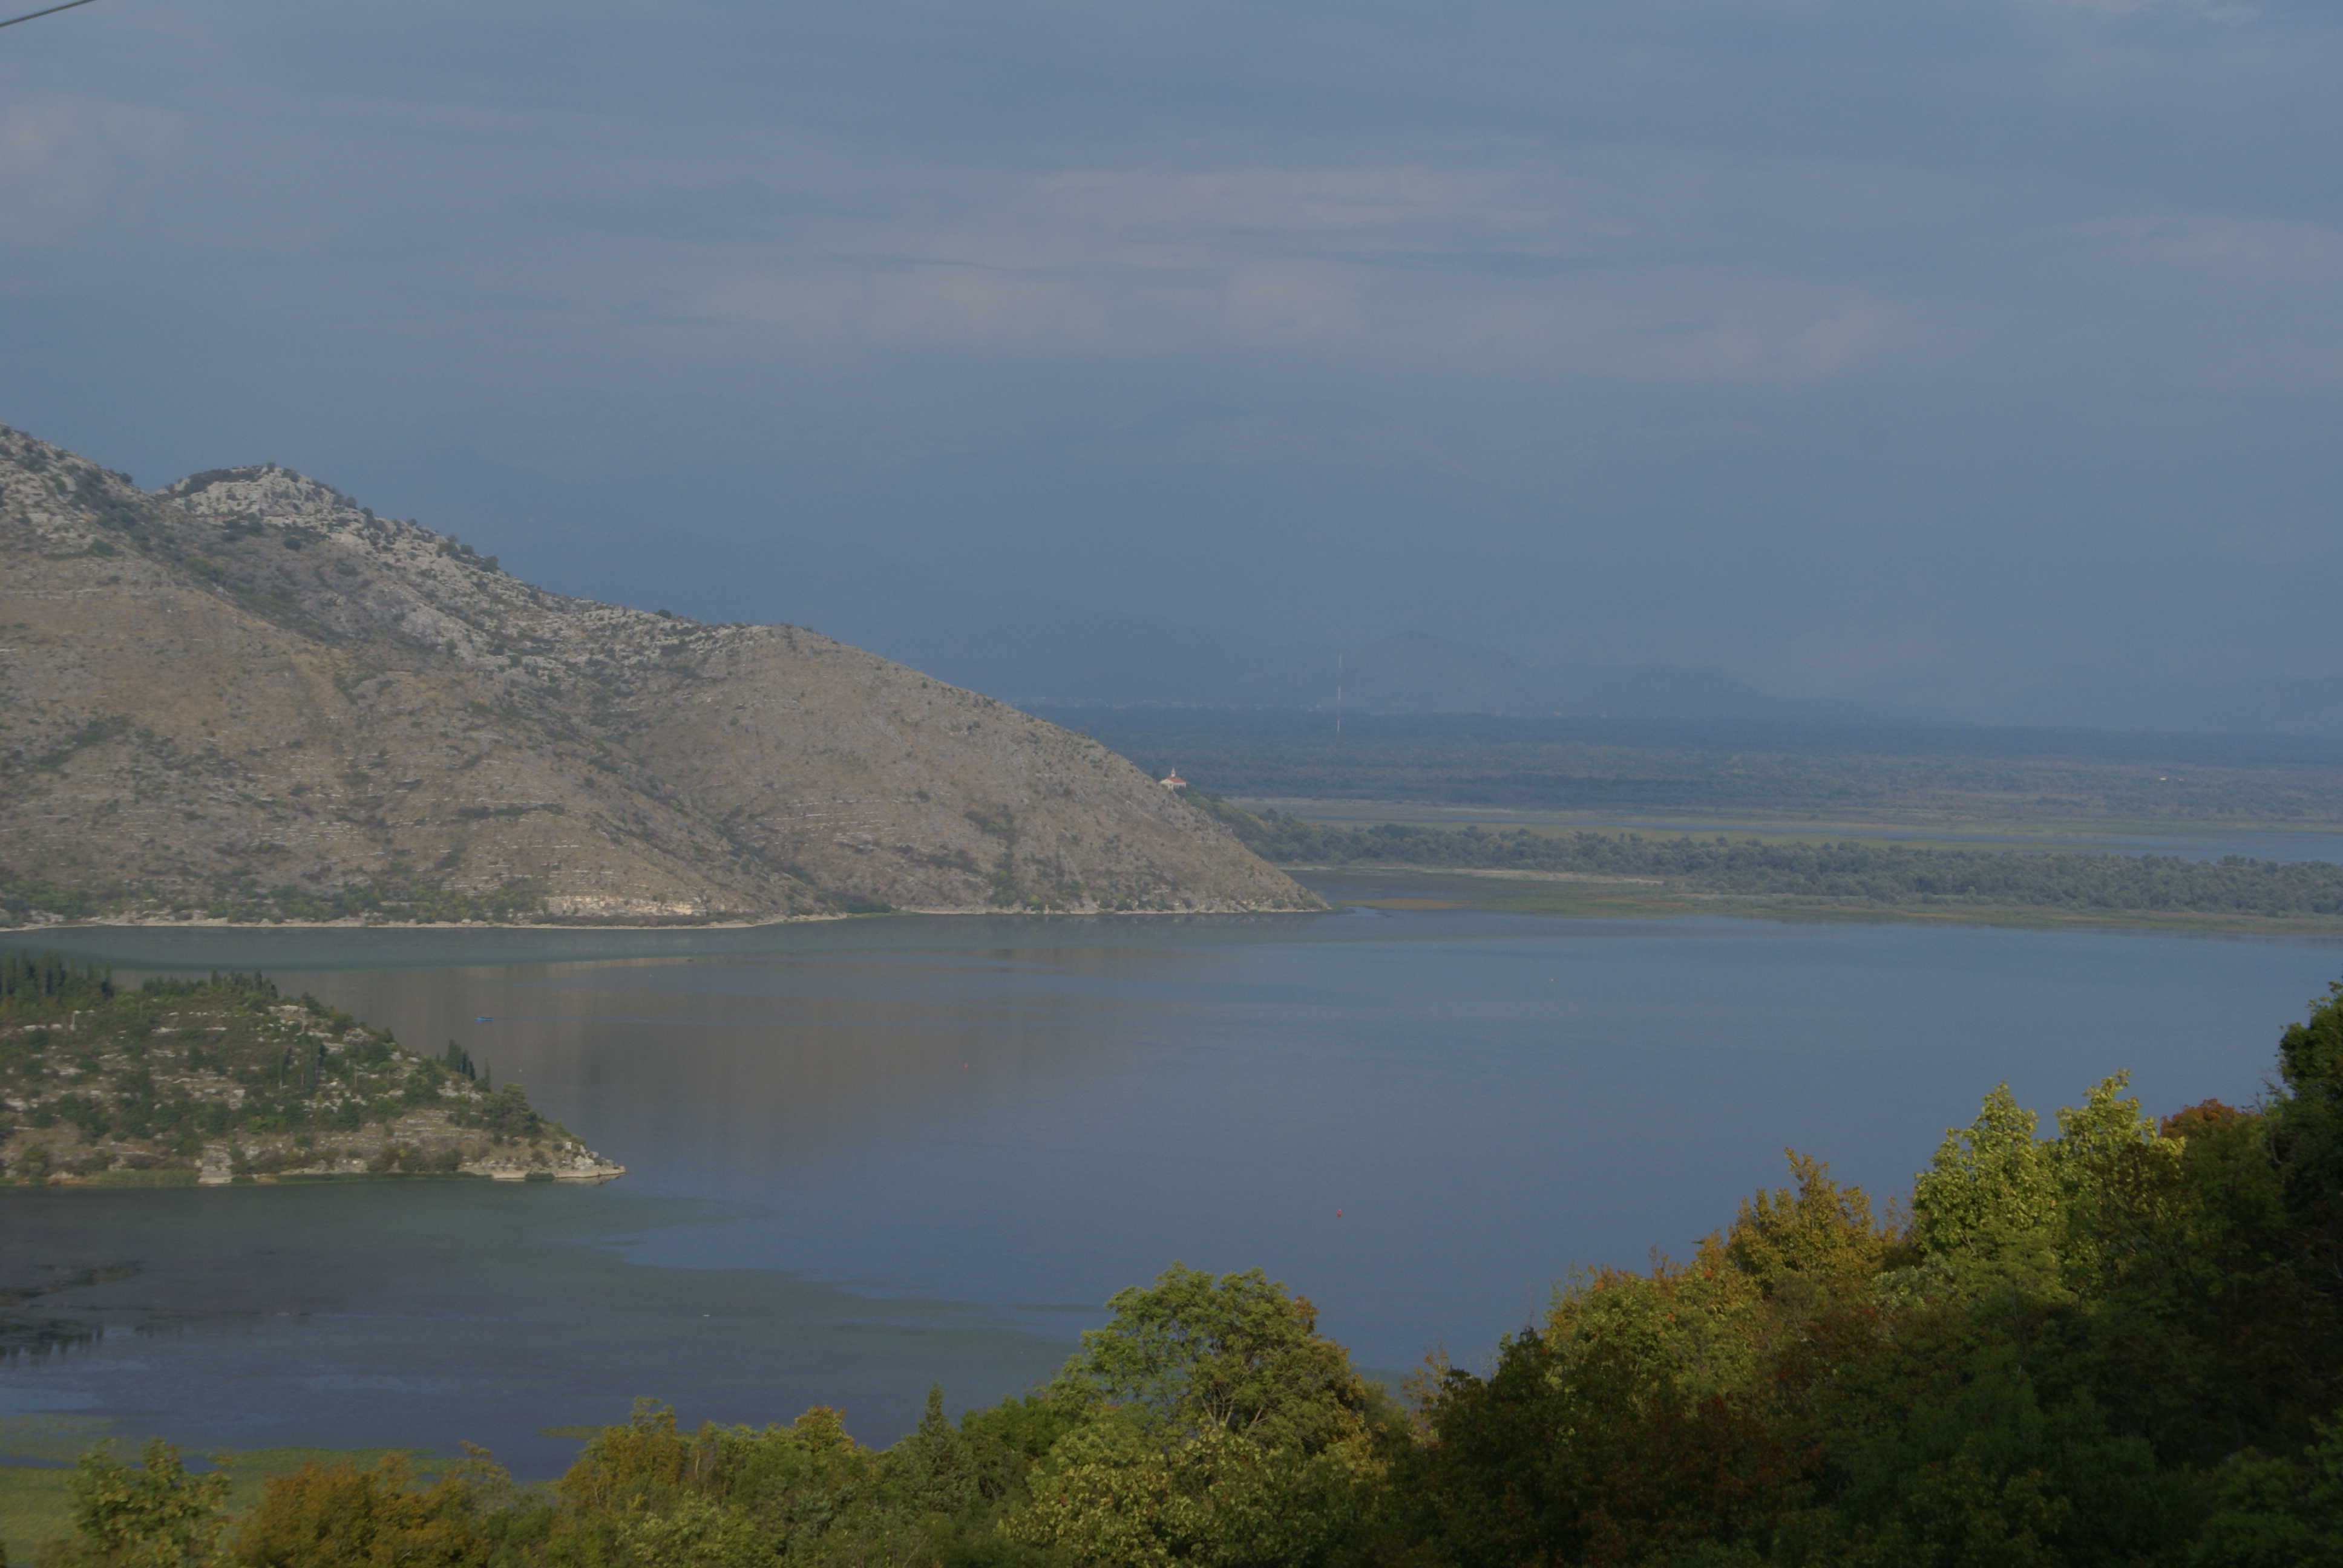 Das Kloster Sveti Nikola Vranjina (in der Bildmitte) am Skadar See, Republik Montenegro, 2021 